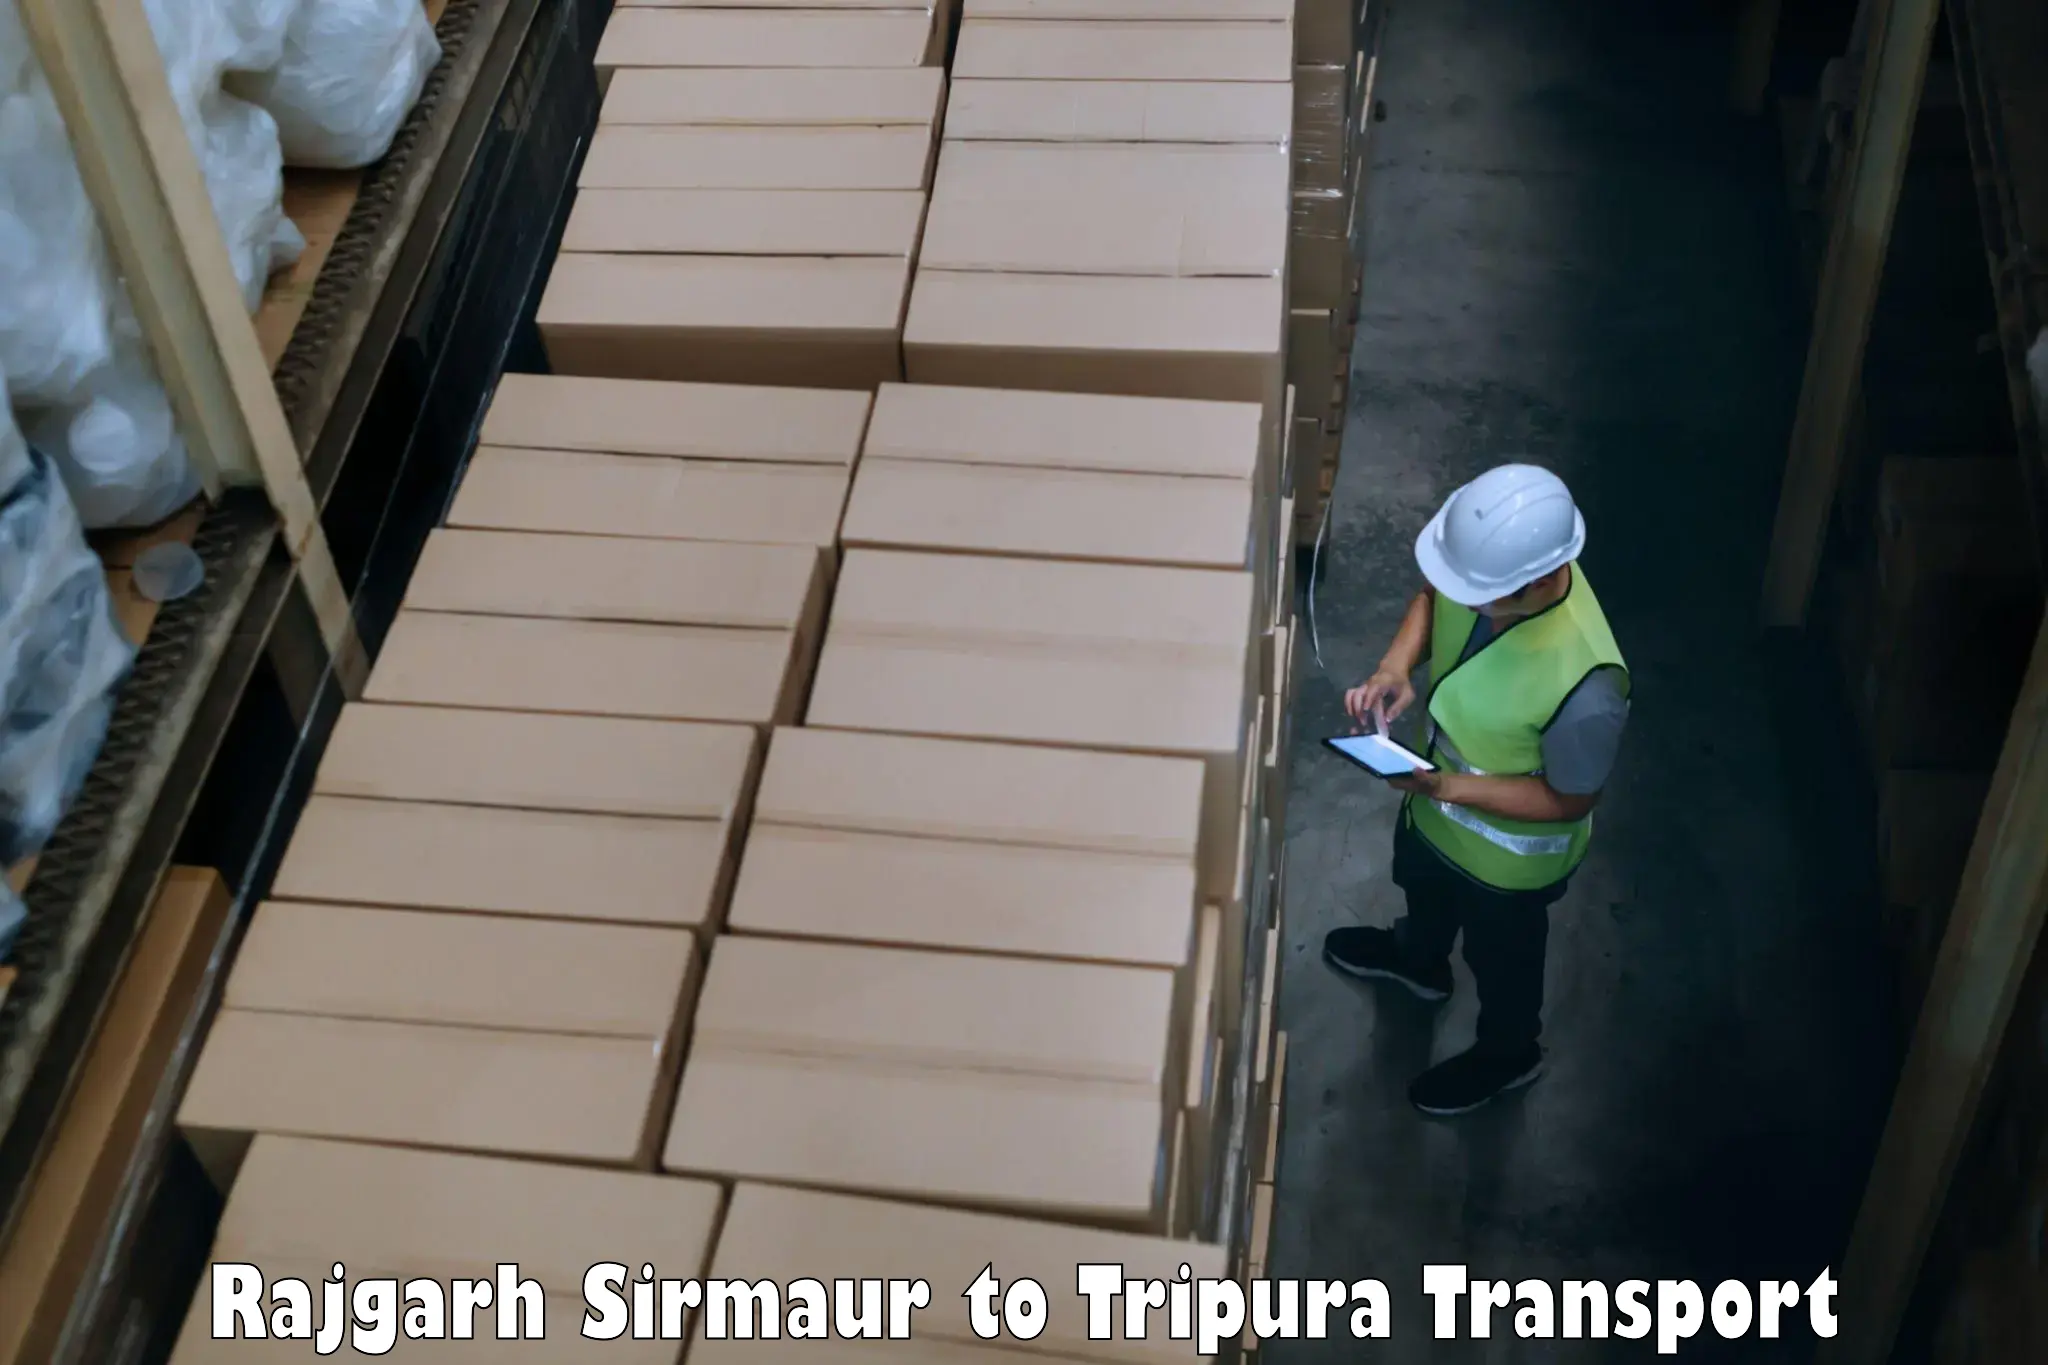 Transport shared services Rajgarh Sirmaur to Tripura